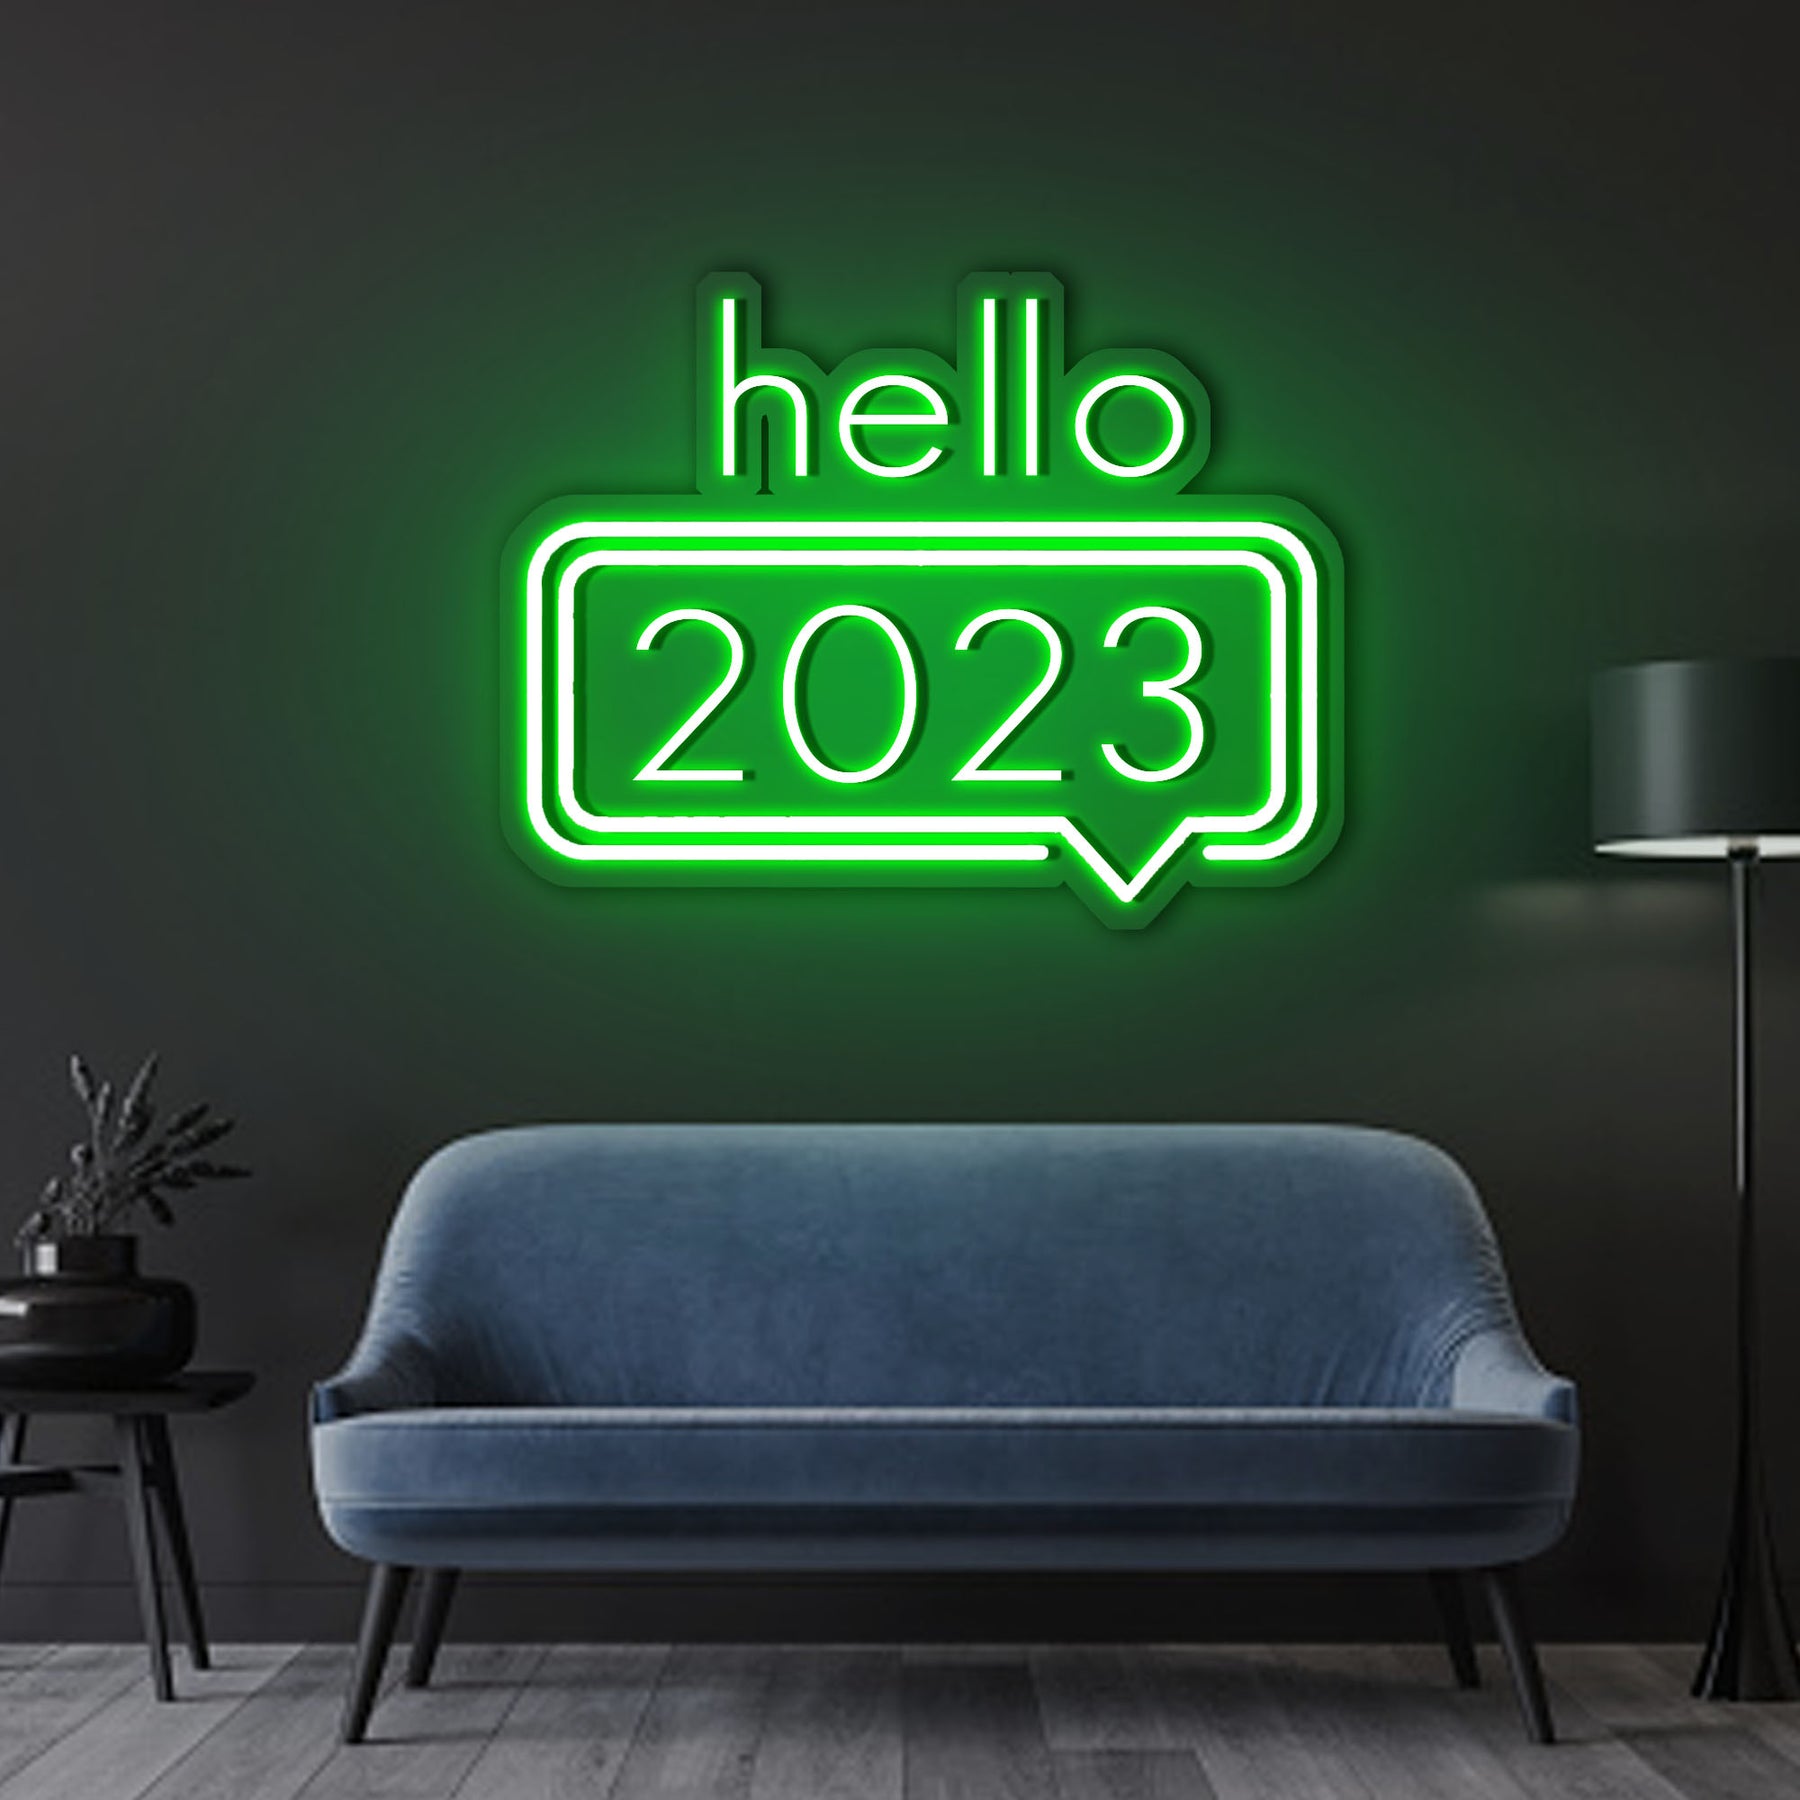 HELLO 2023 Neon Sign